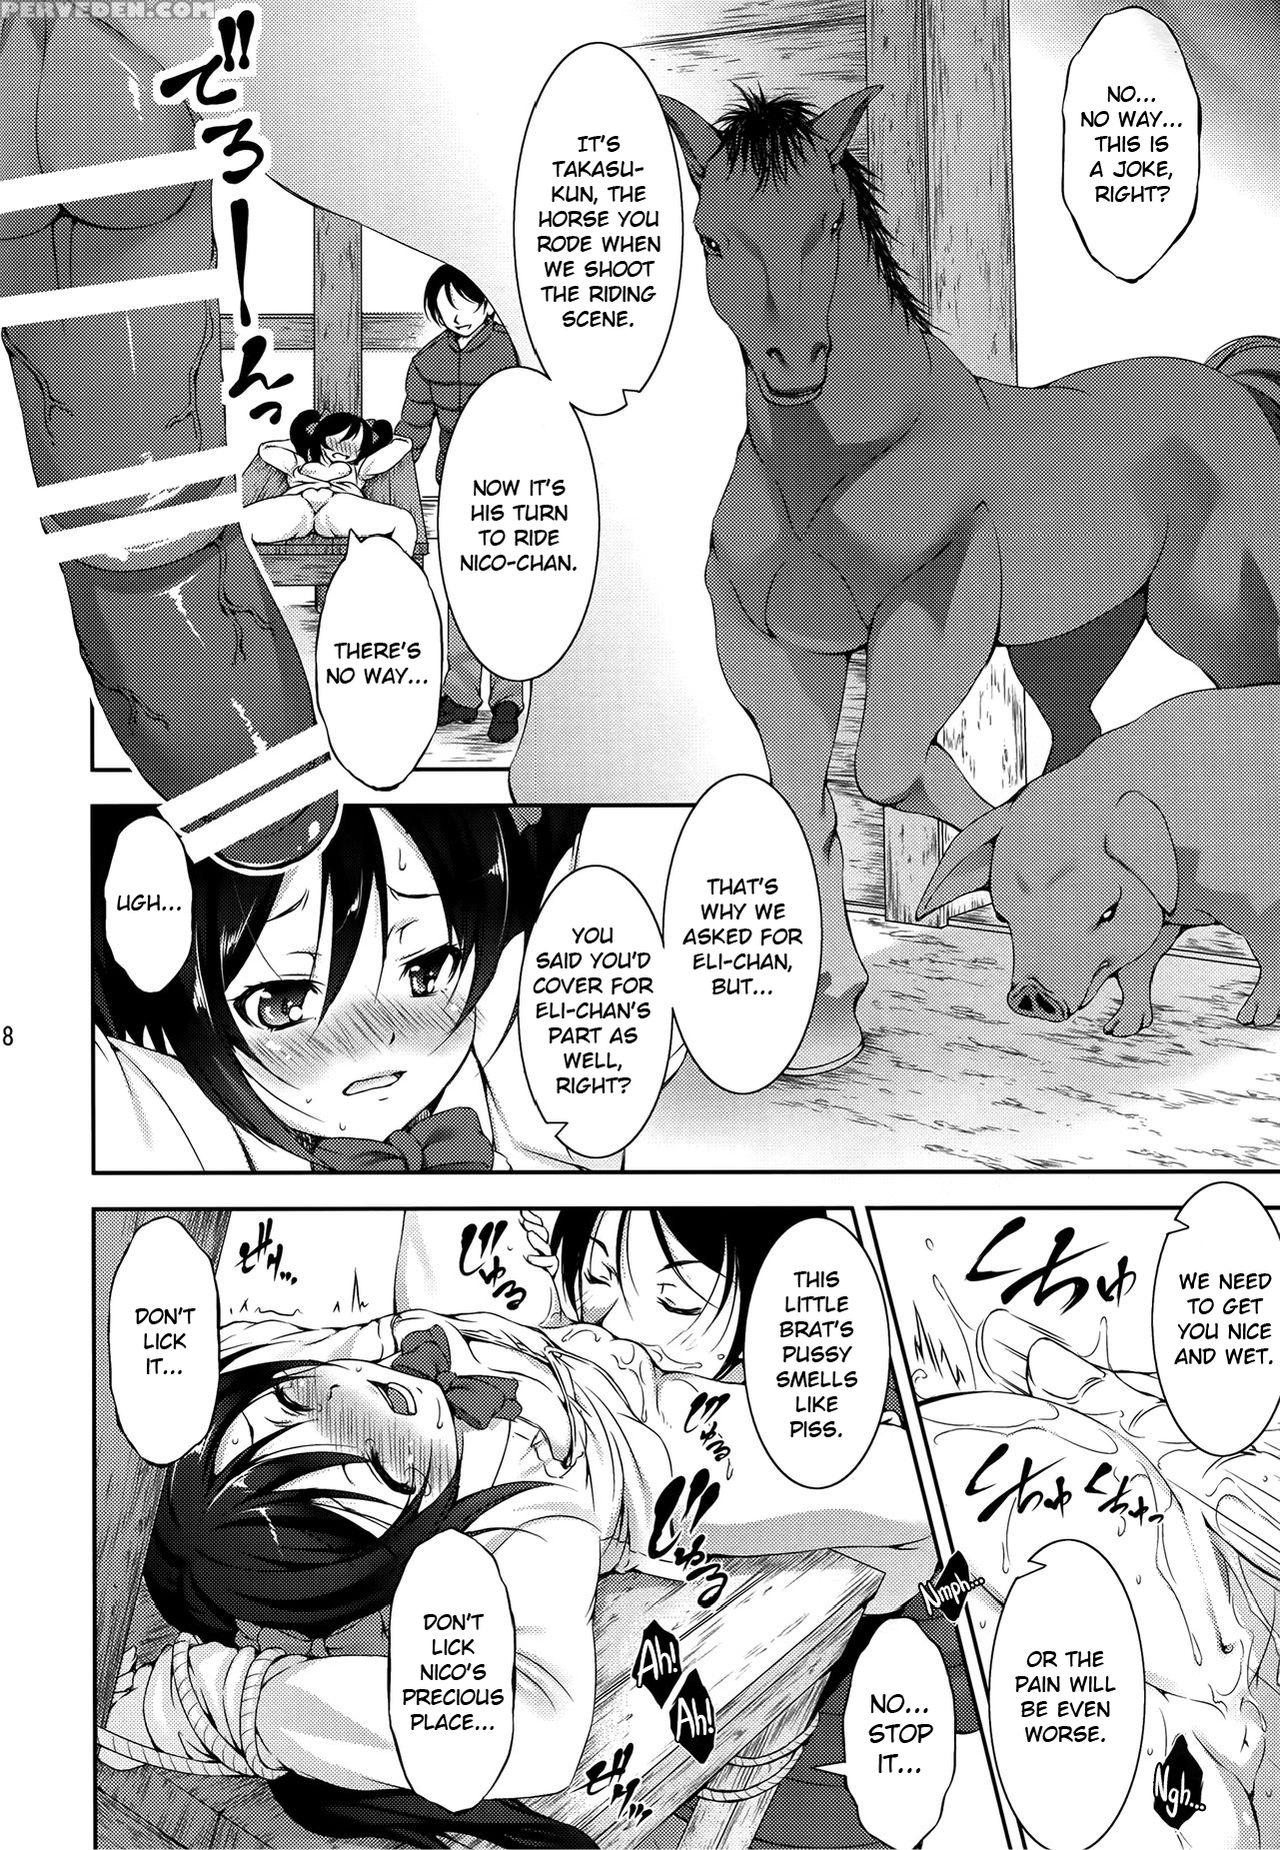 Beastilty manga